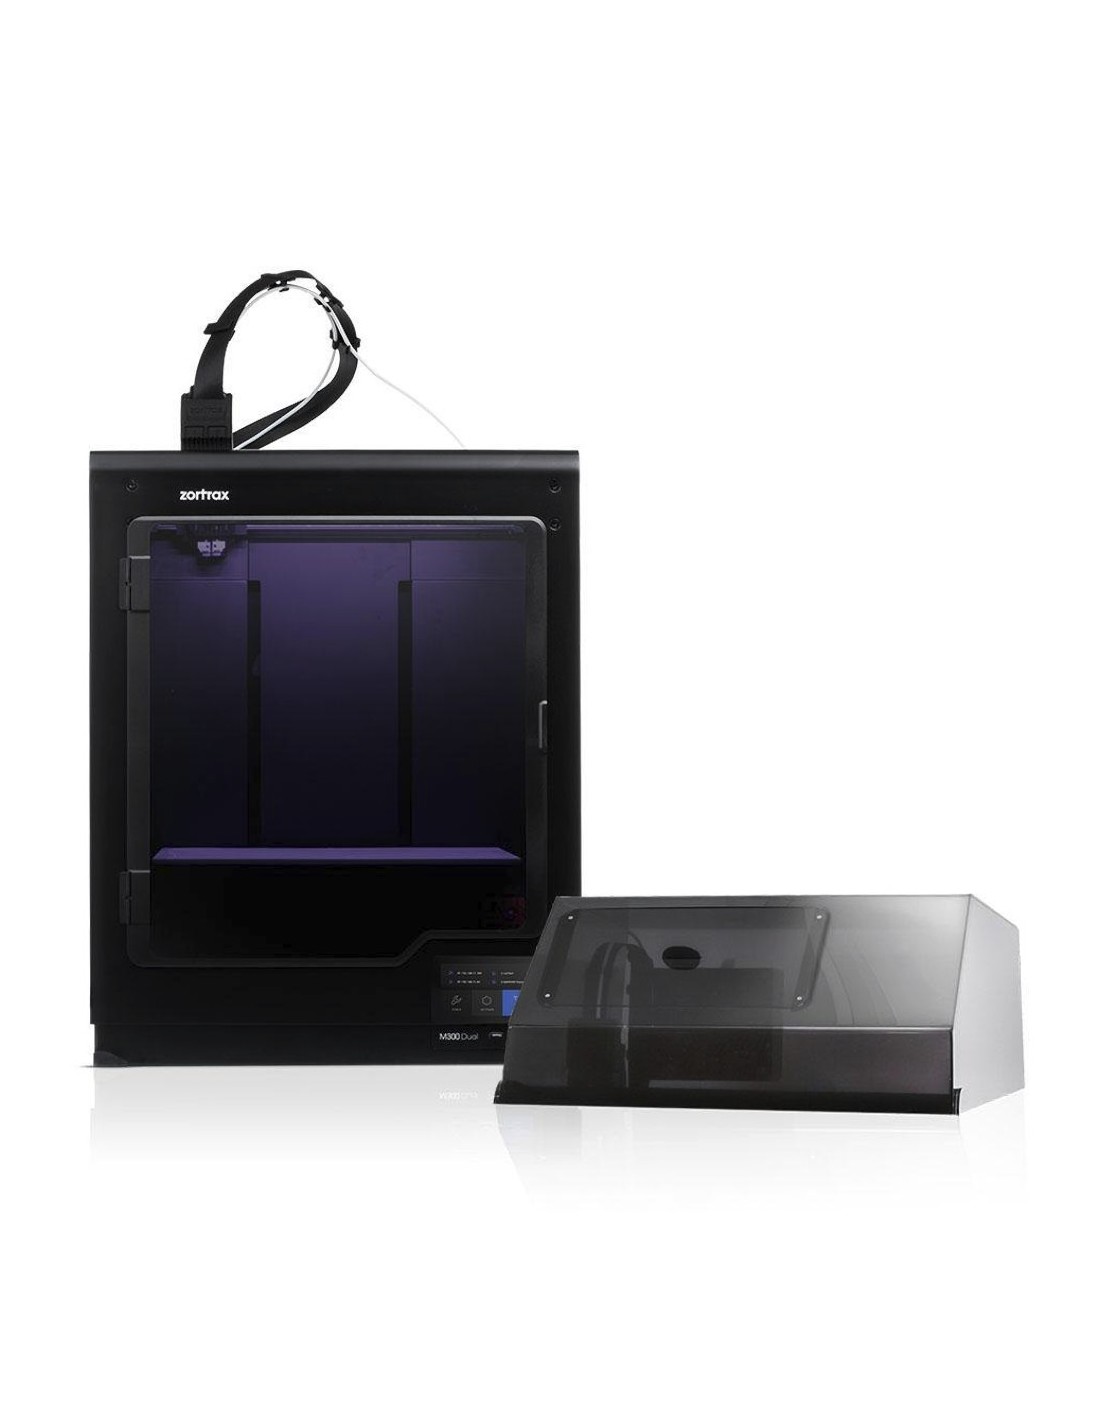 Zortrax M300 Dual - impresora 3D